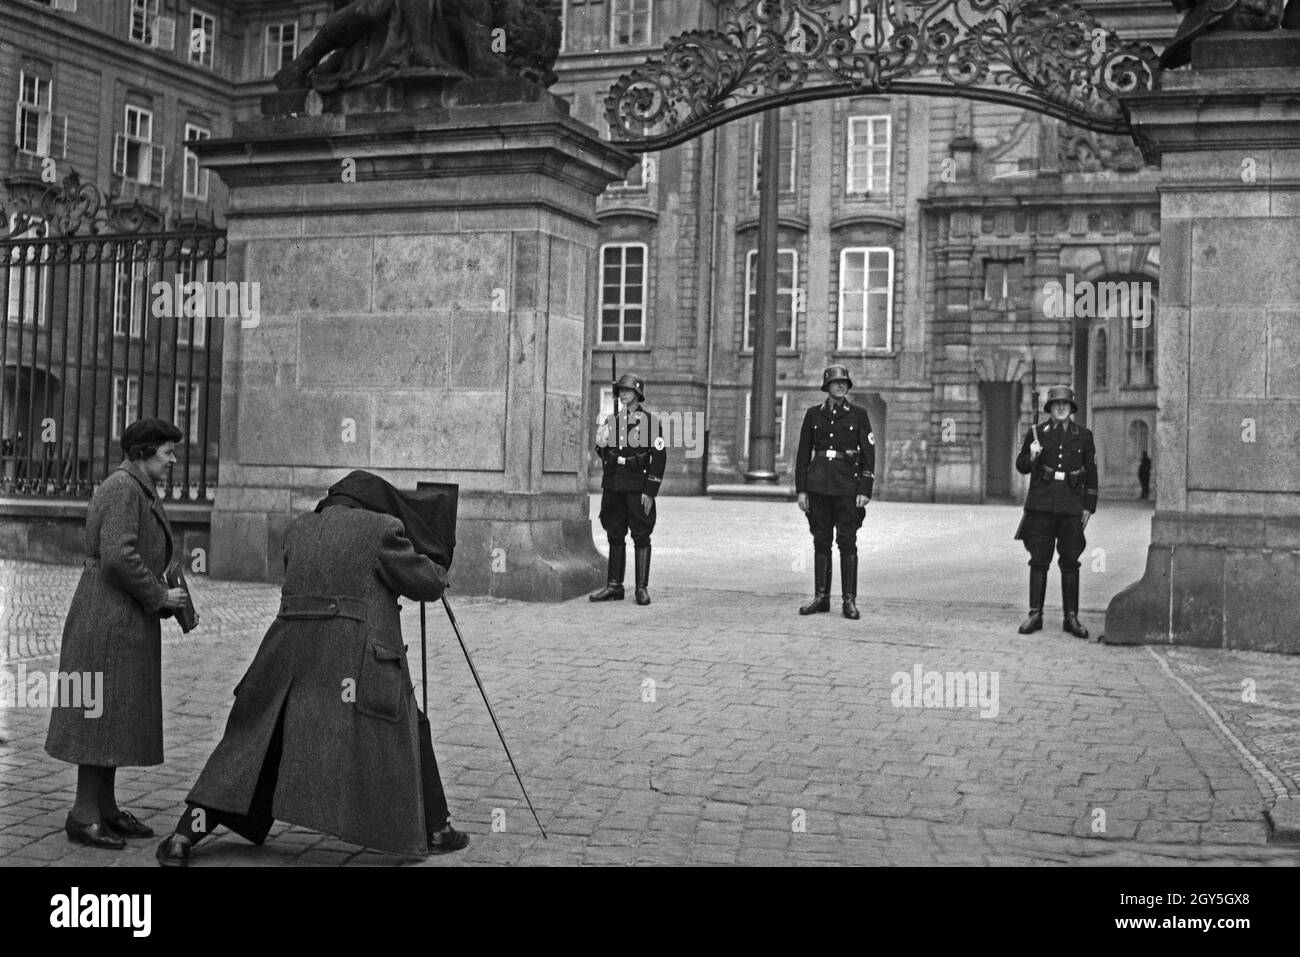 Ein Fotograf hält die SS Wache am Eingang der Prager Burg auf Platte fest, Prag 1930er Jahre. A photographer taking a photo of the SS guards at the entrance of Prague castle, 1930s. Stock Photo